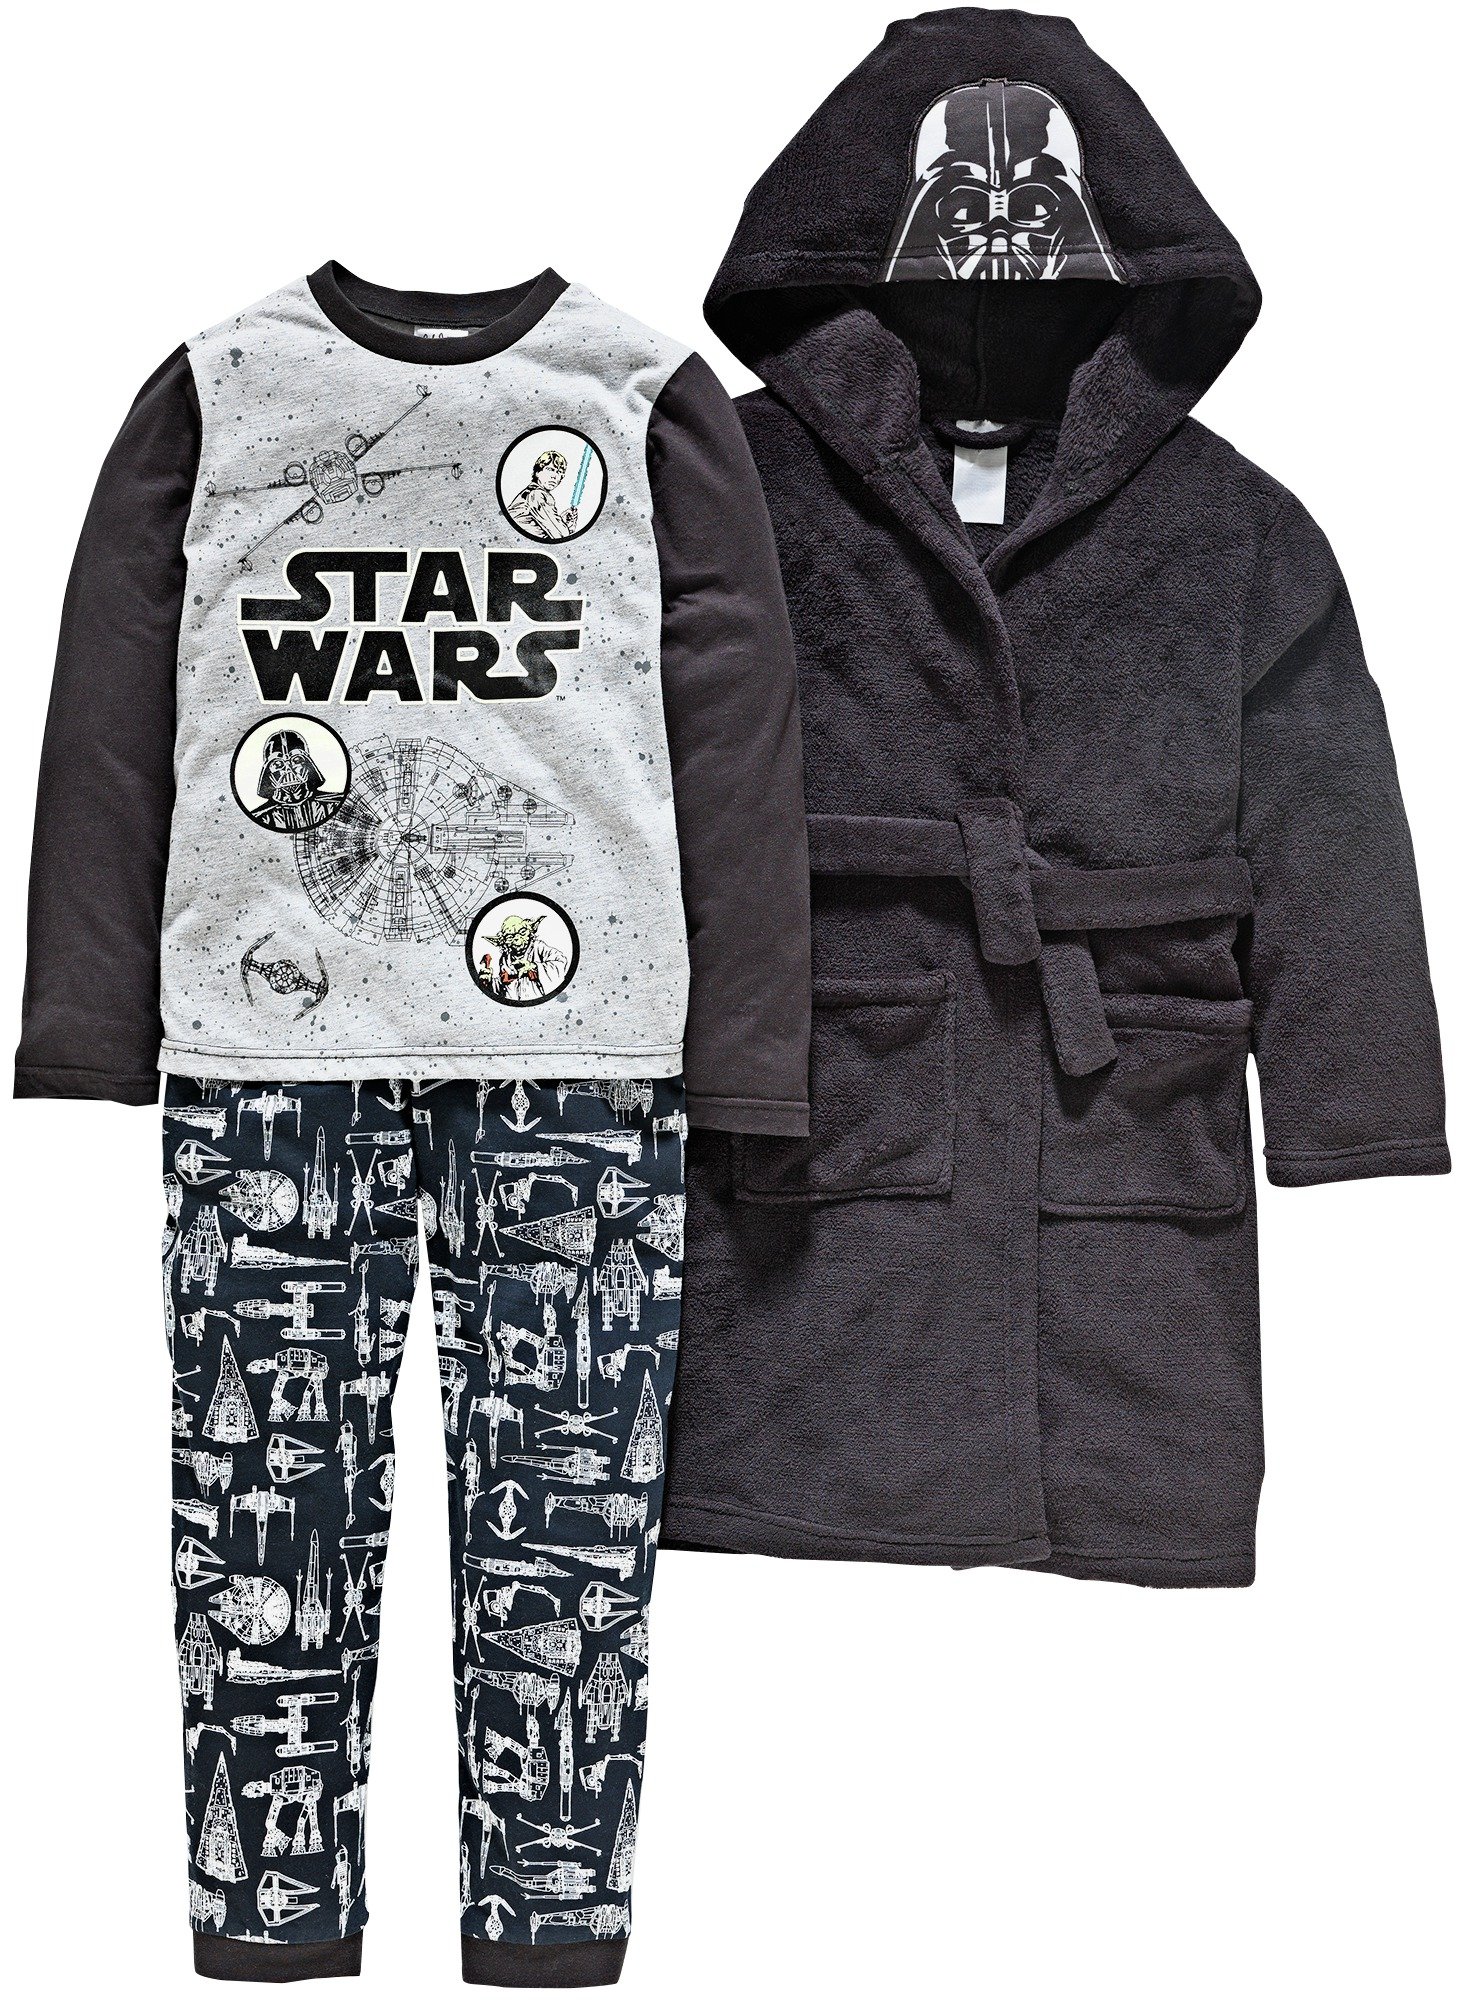 Star Wars Nightwear Set - 9-10 Years